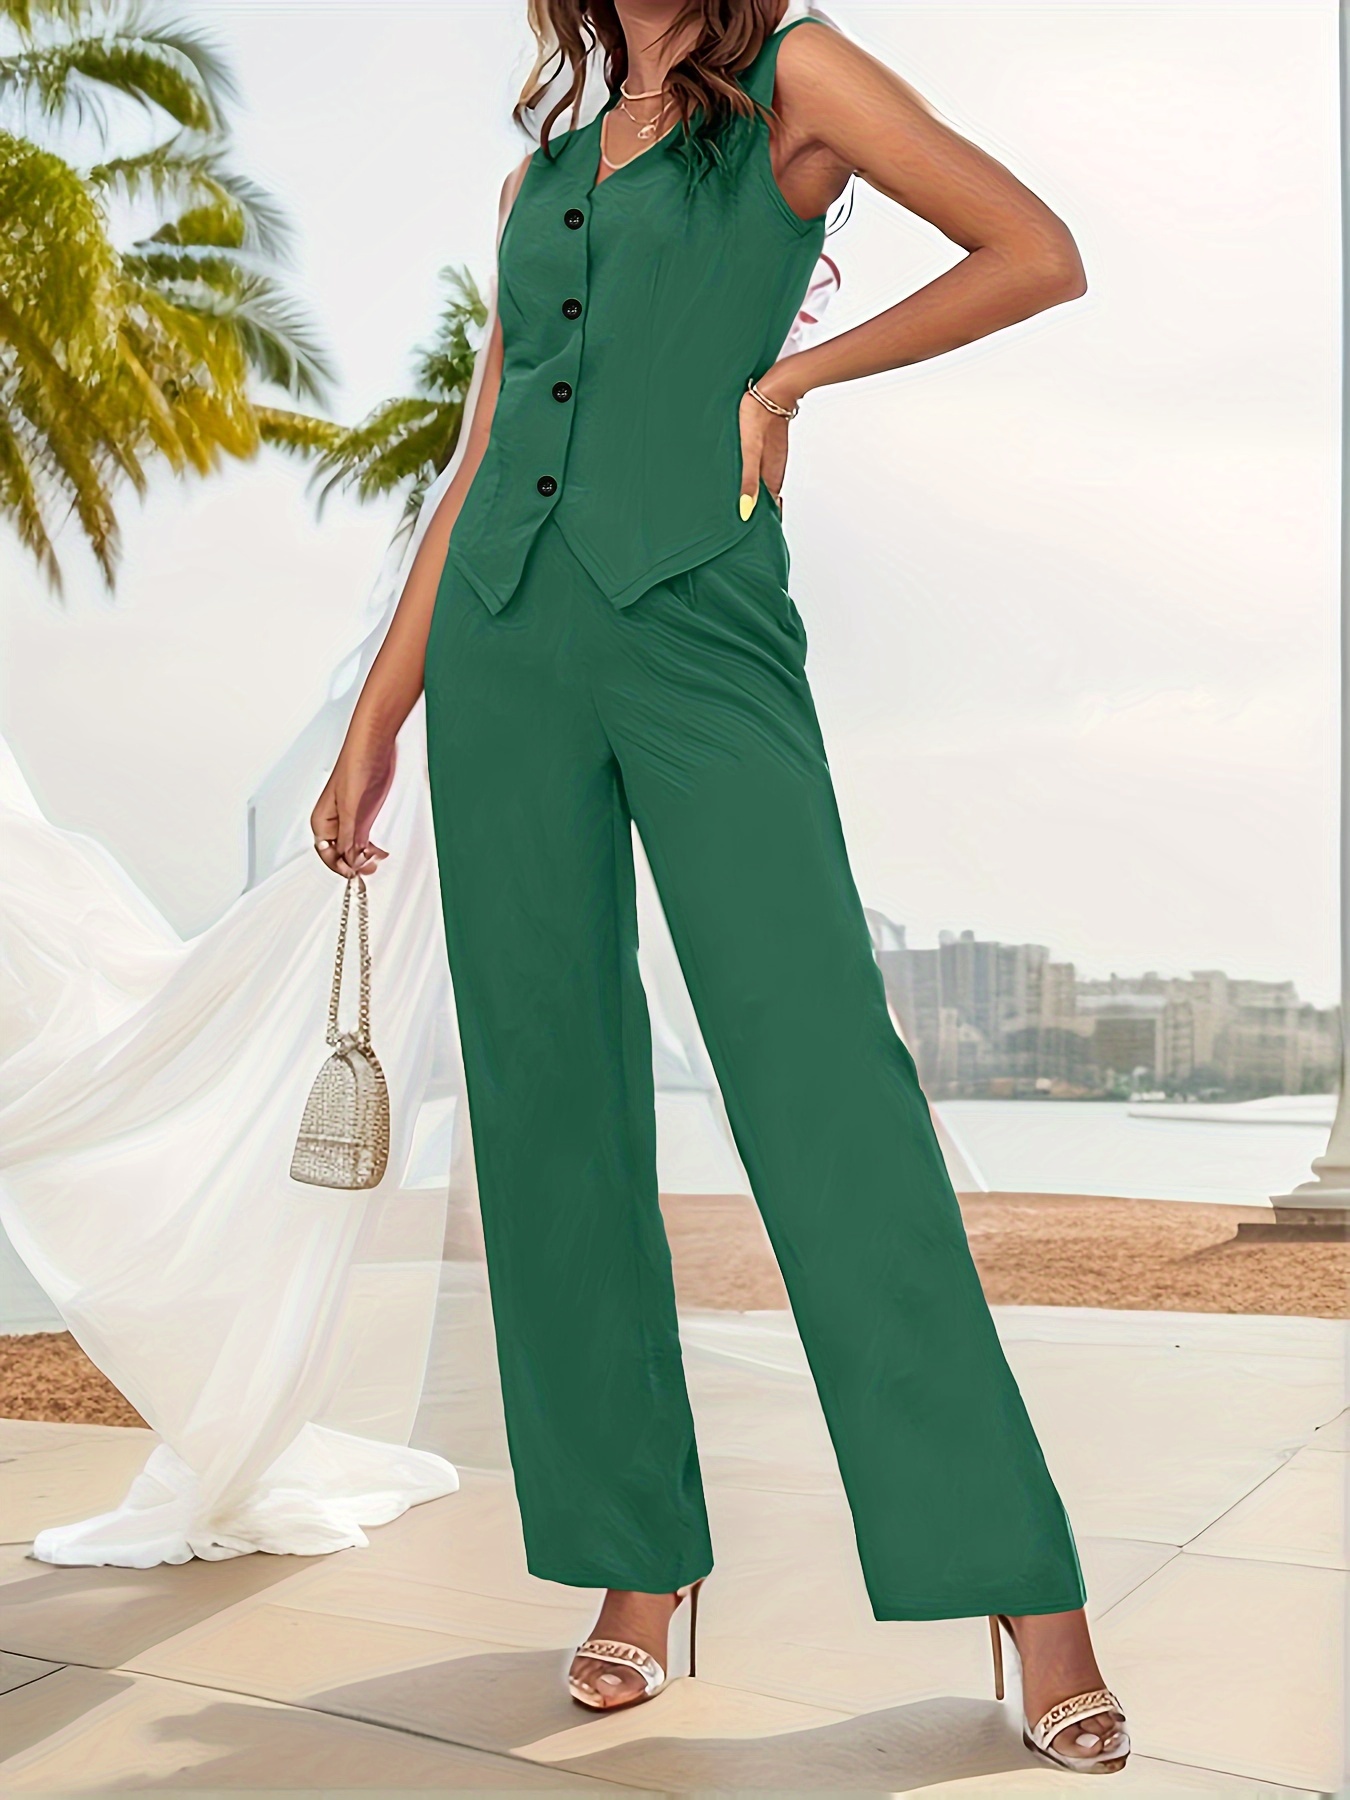 Ingrily Elegant Concise 2 Piece Set Women Full Sleeveless Vest+